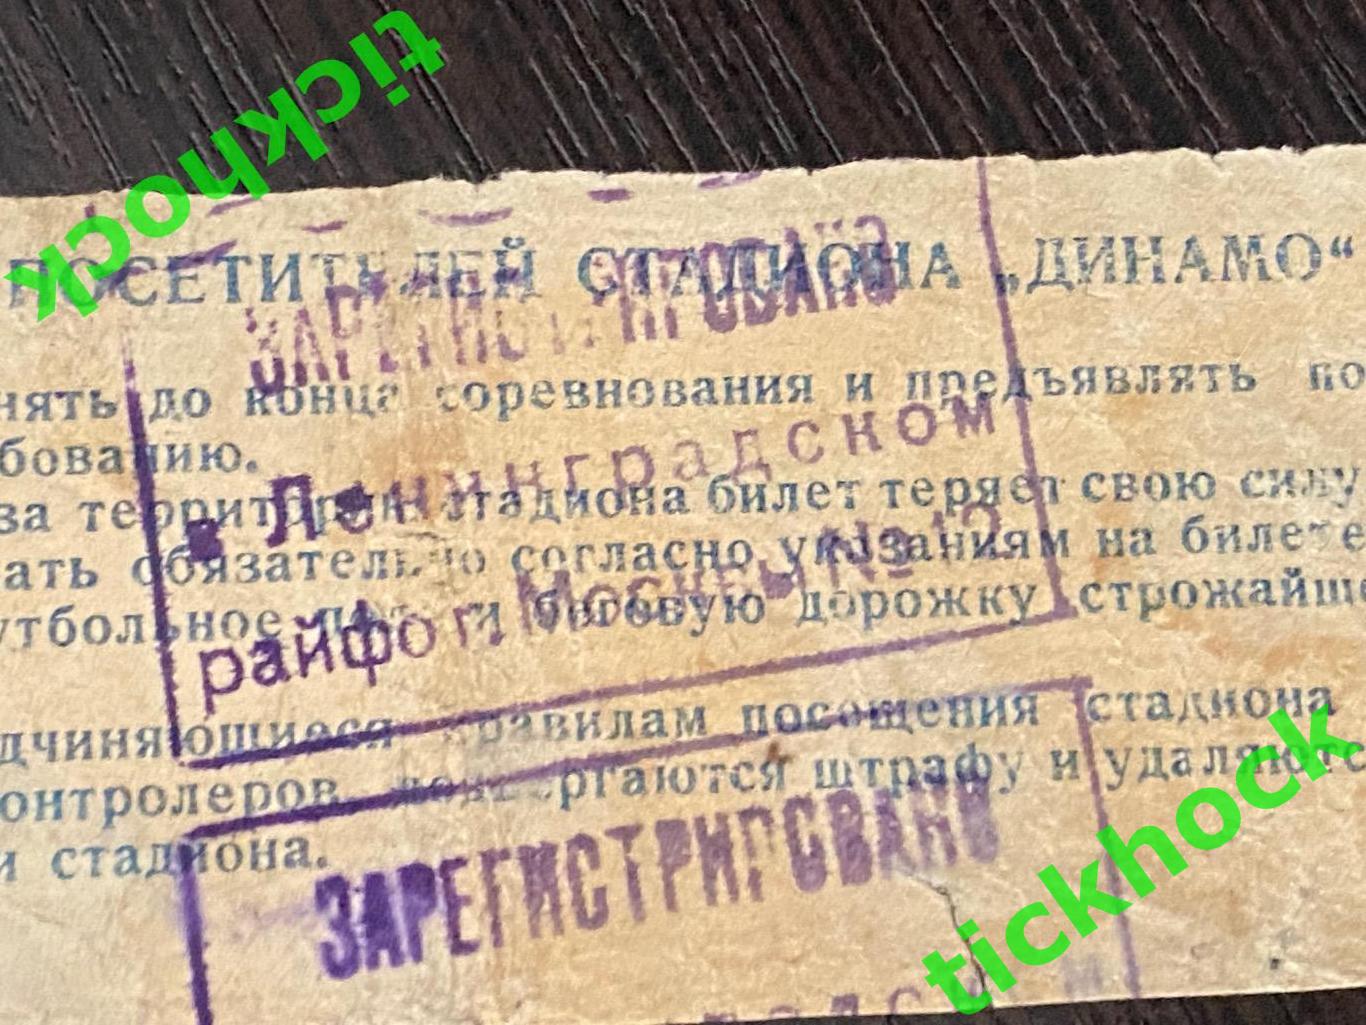 Спартак Москва - ЦДСА / ЦСКА Москва 08.05.1955-- билет -- восточная трибуна 4